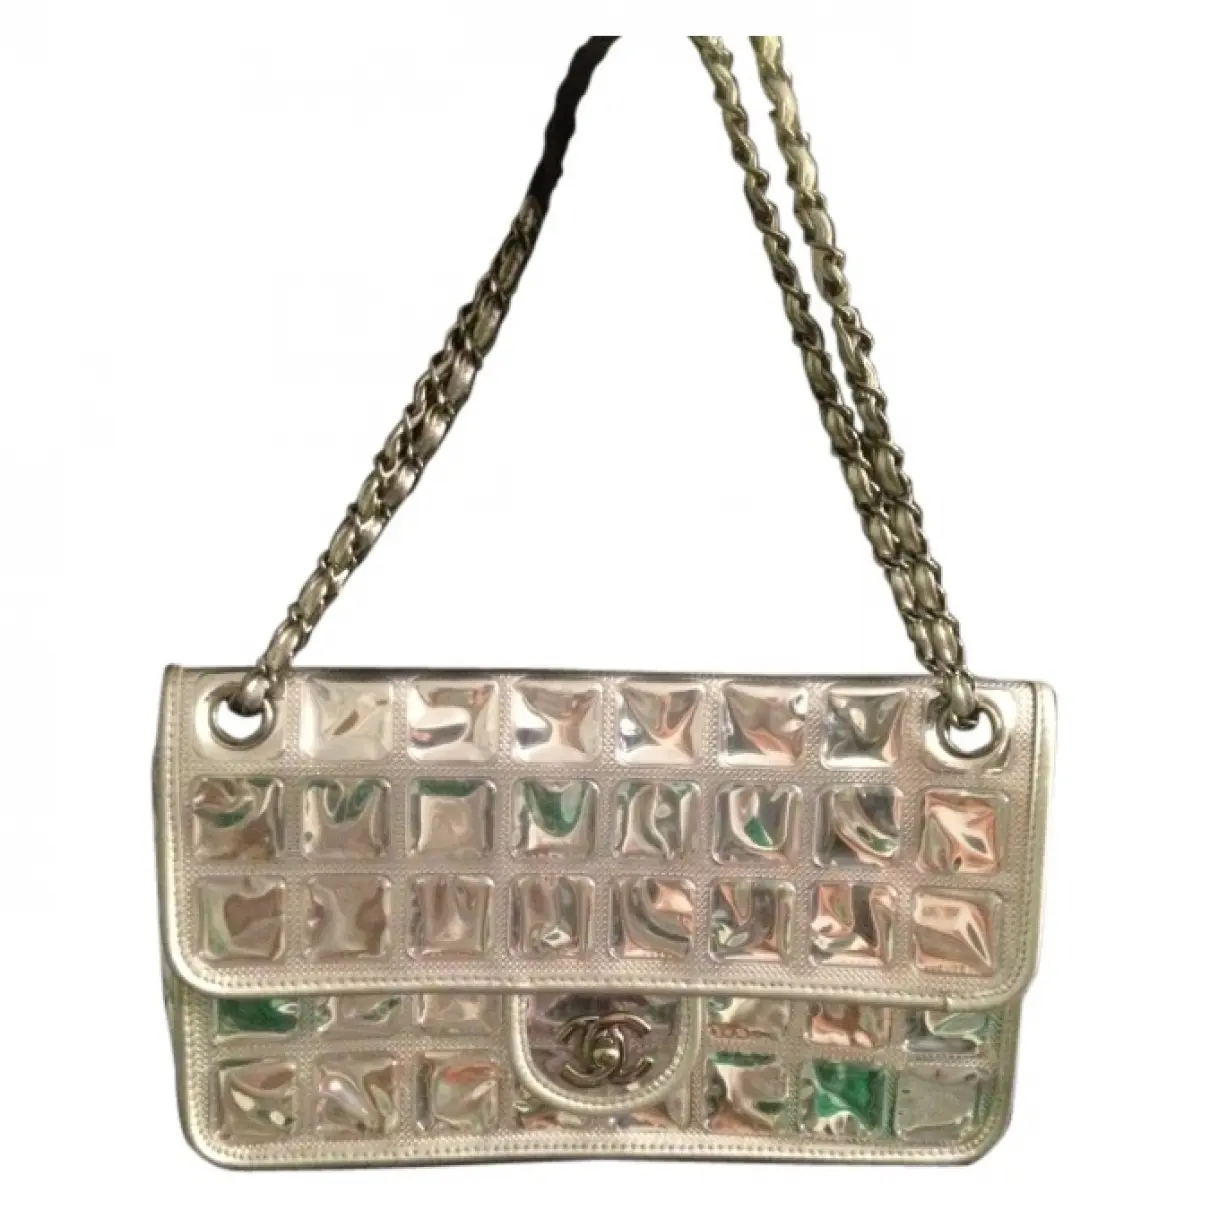 Buy Chanel Silver Leather Handbag online